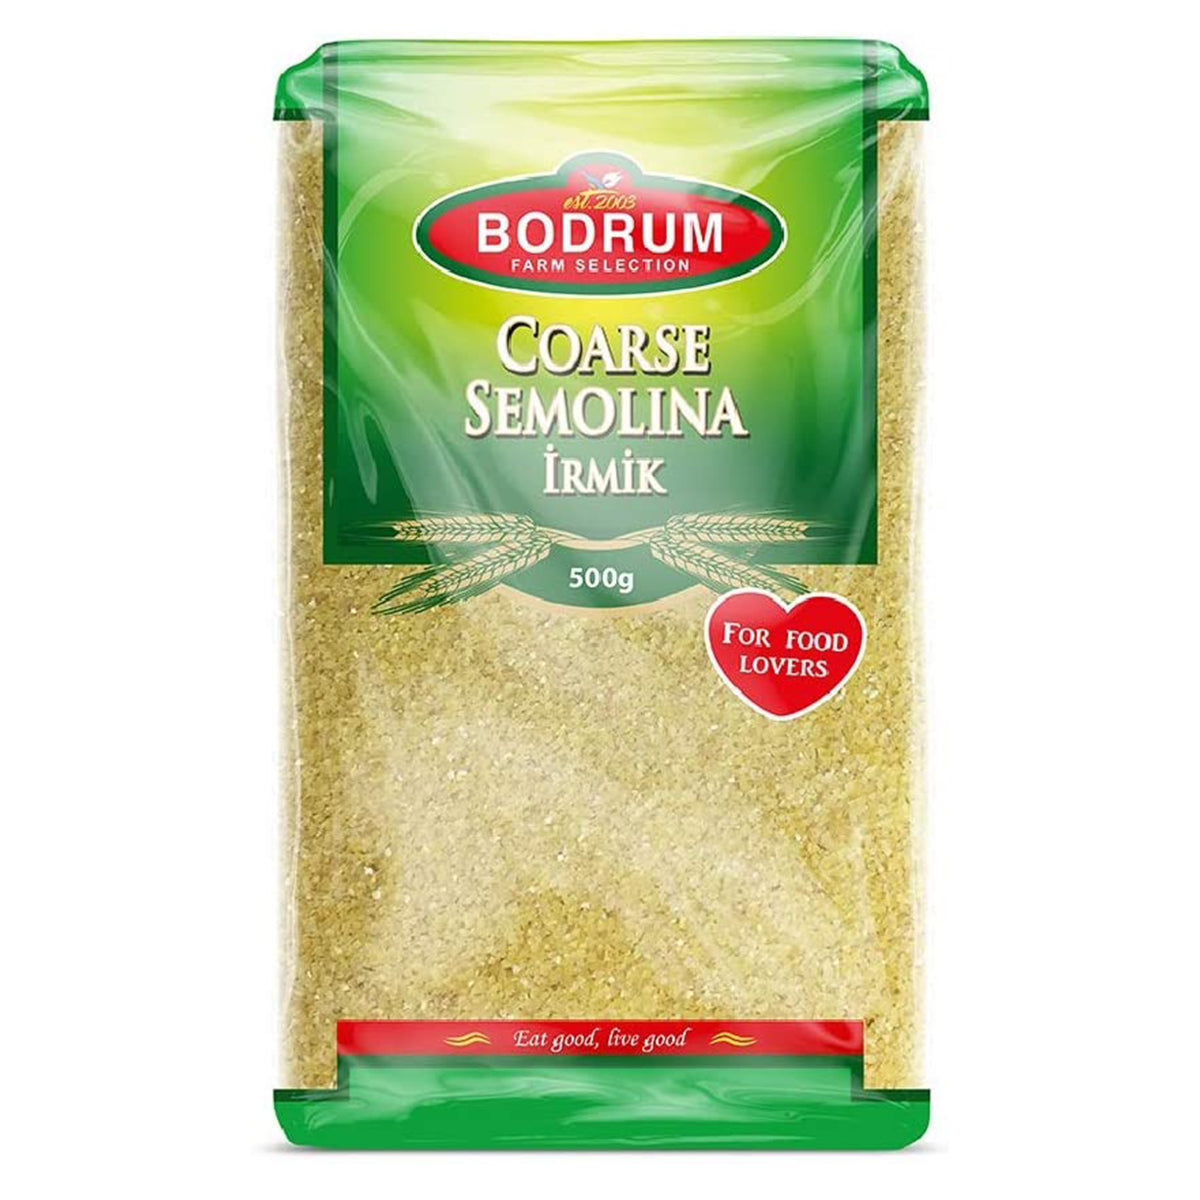 Bodrum - Coarse Semolina (İrmik) mix.